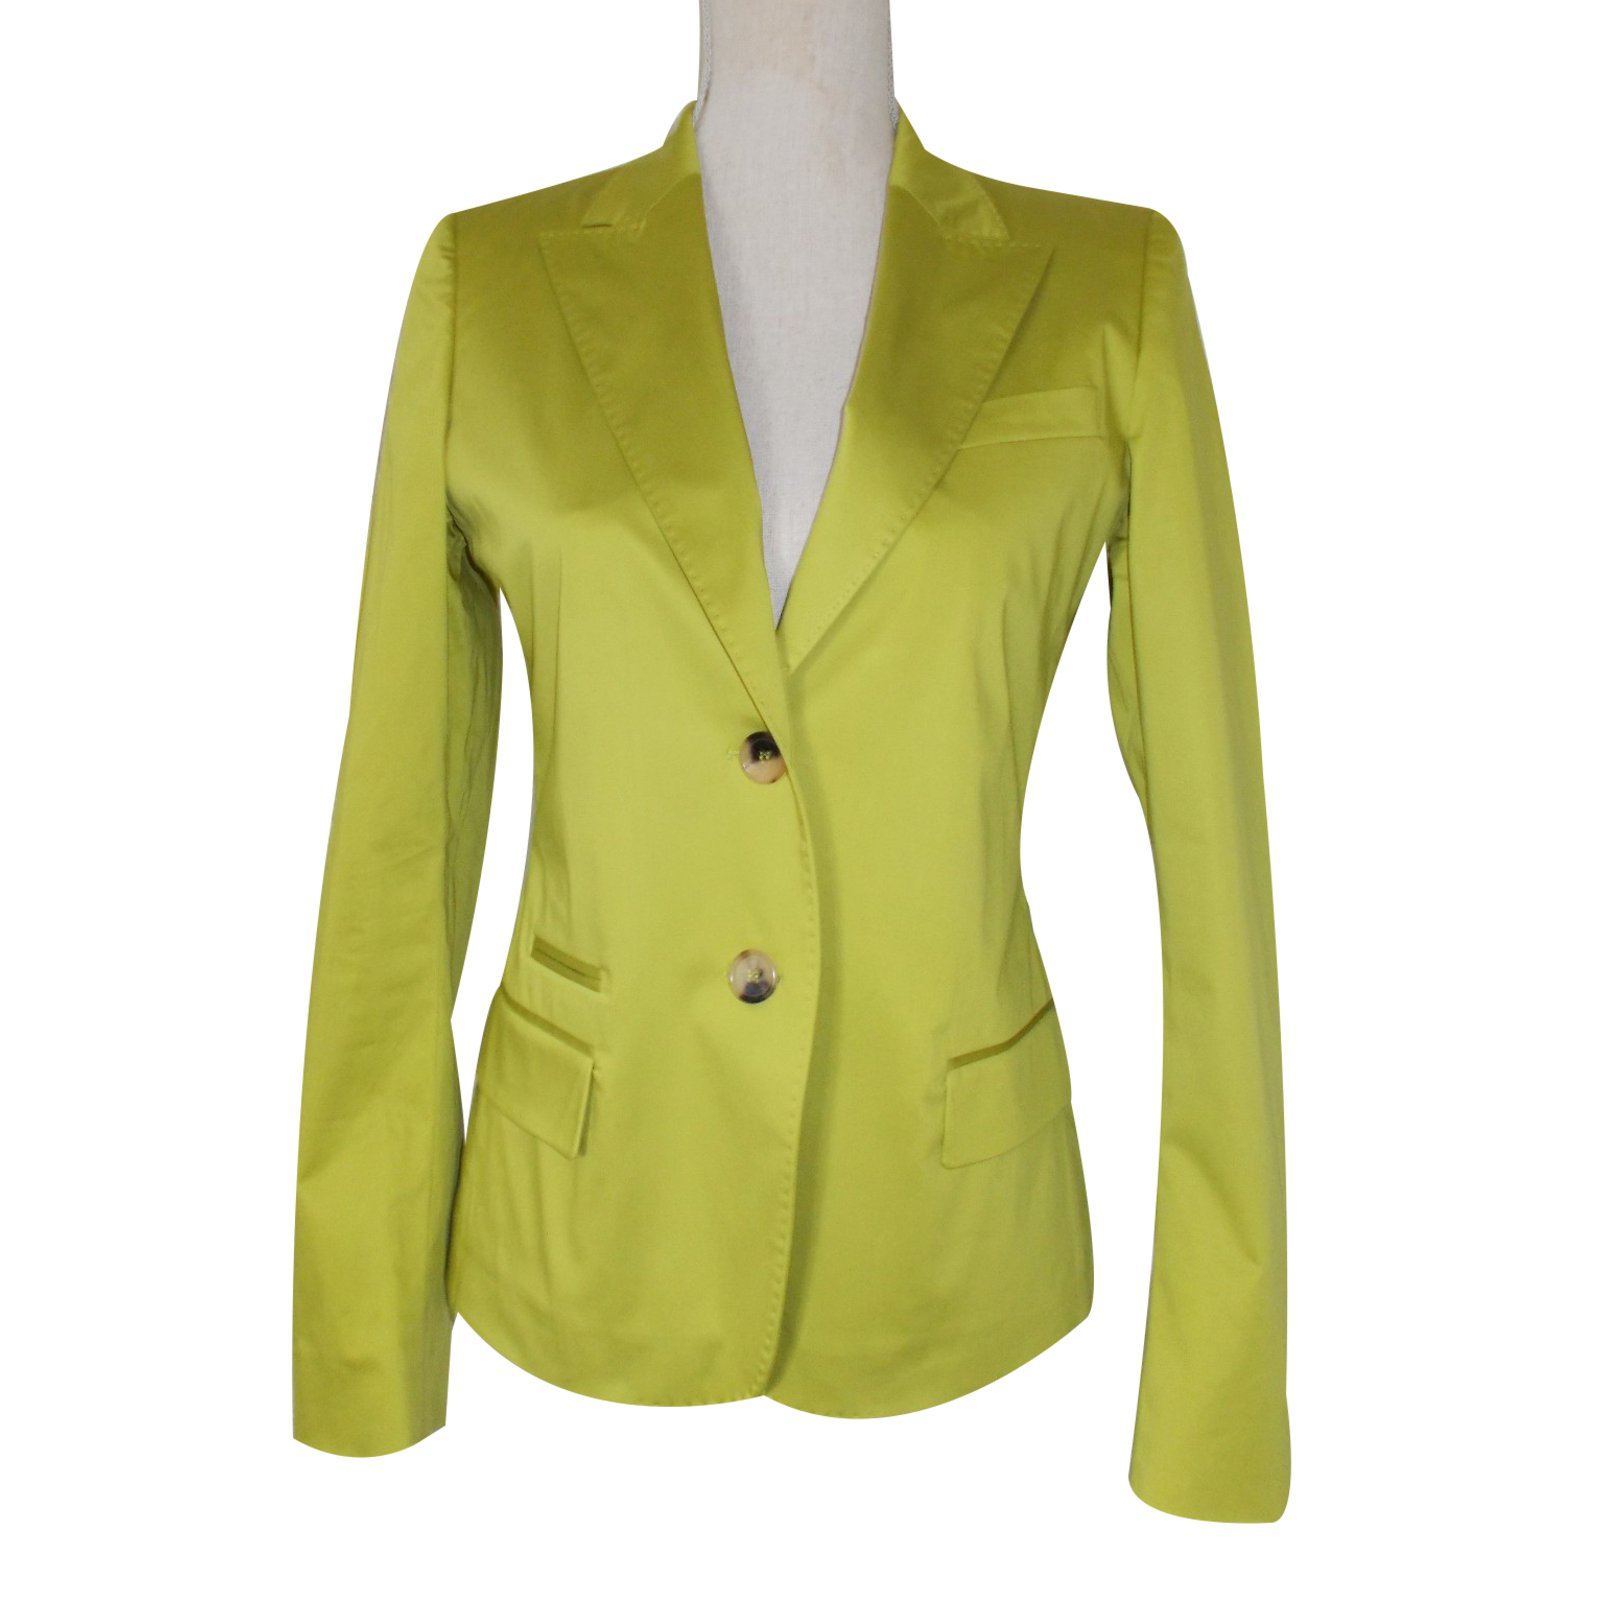 REN/É LEZARD Womens Suit Jacket